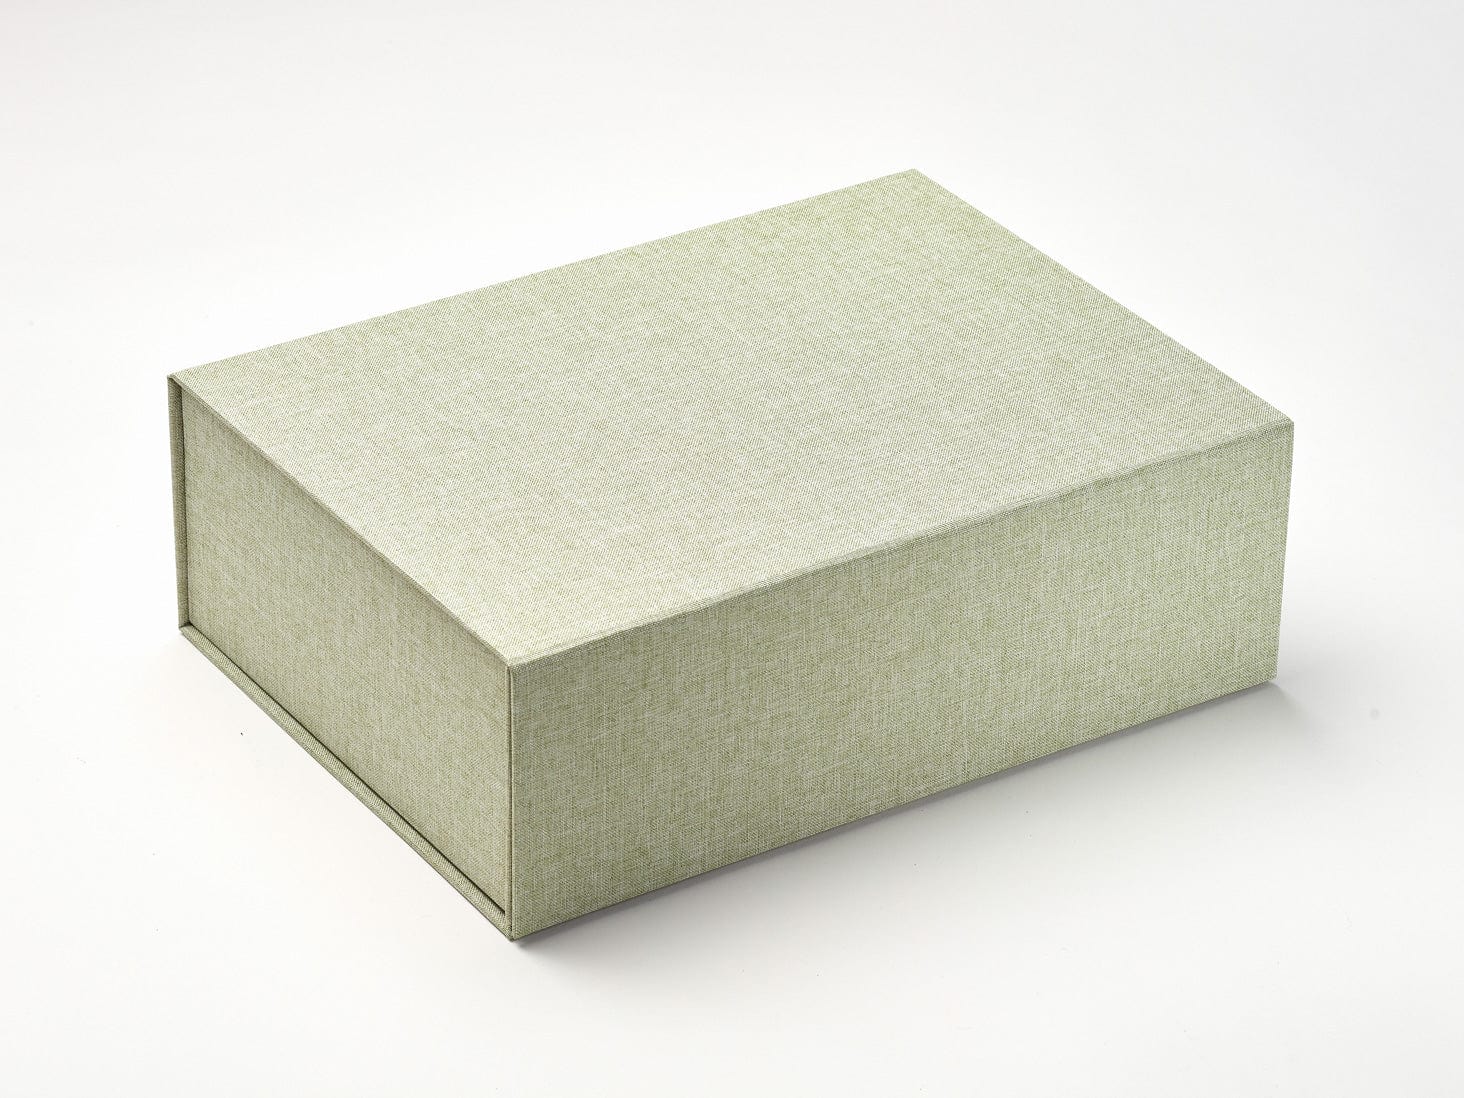 Sample Sage Green Linen No Magnets Gift Box Assembled